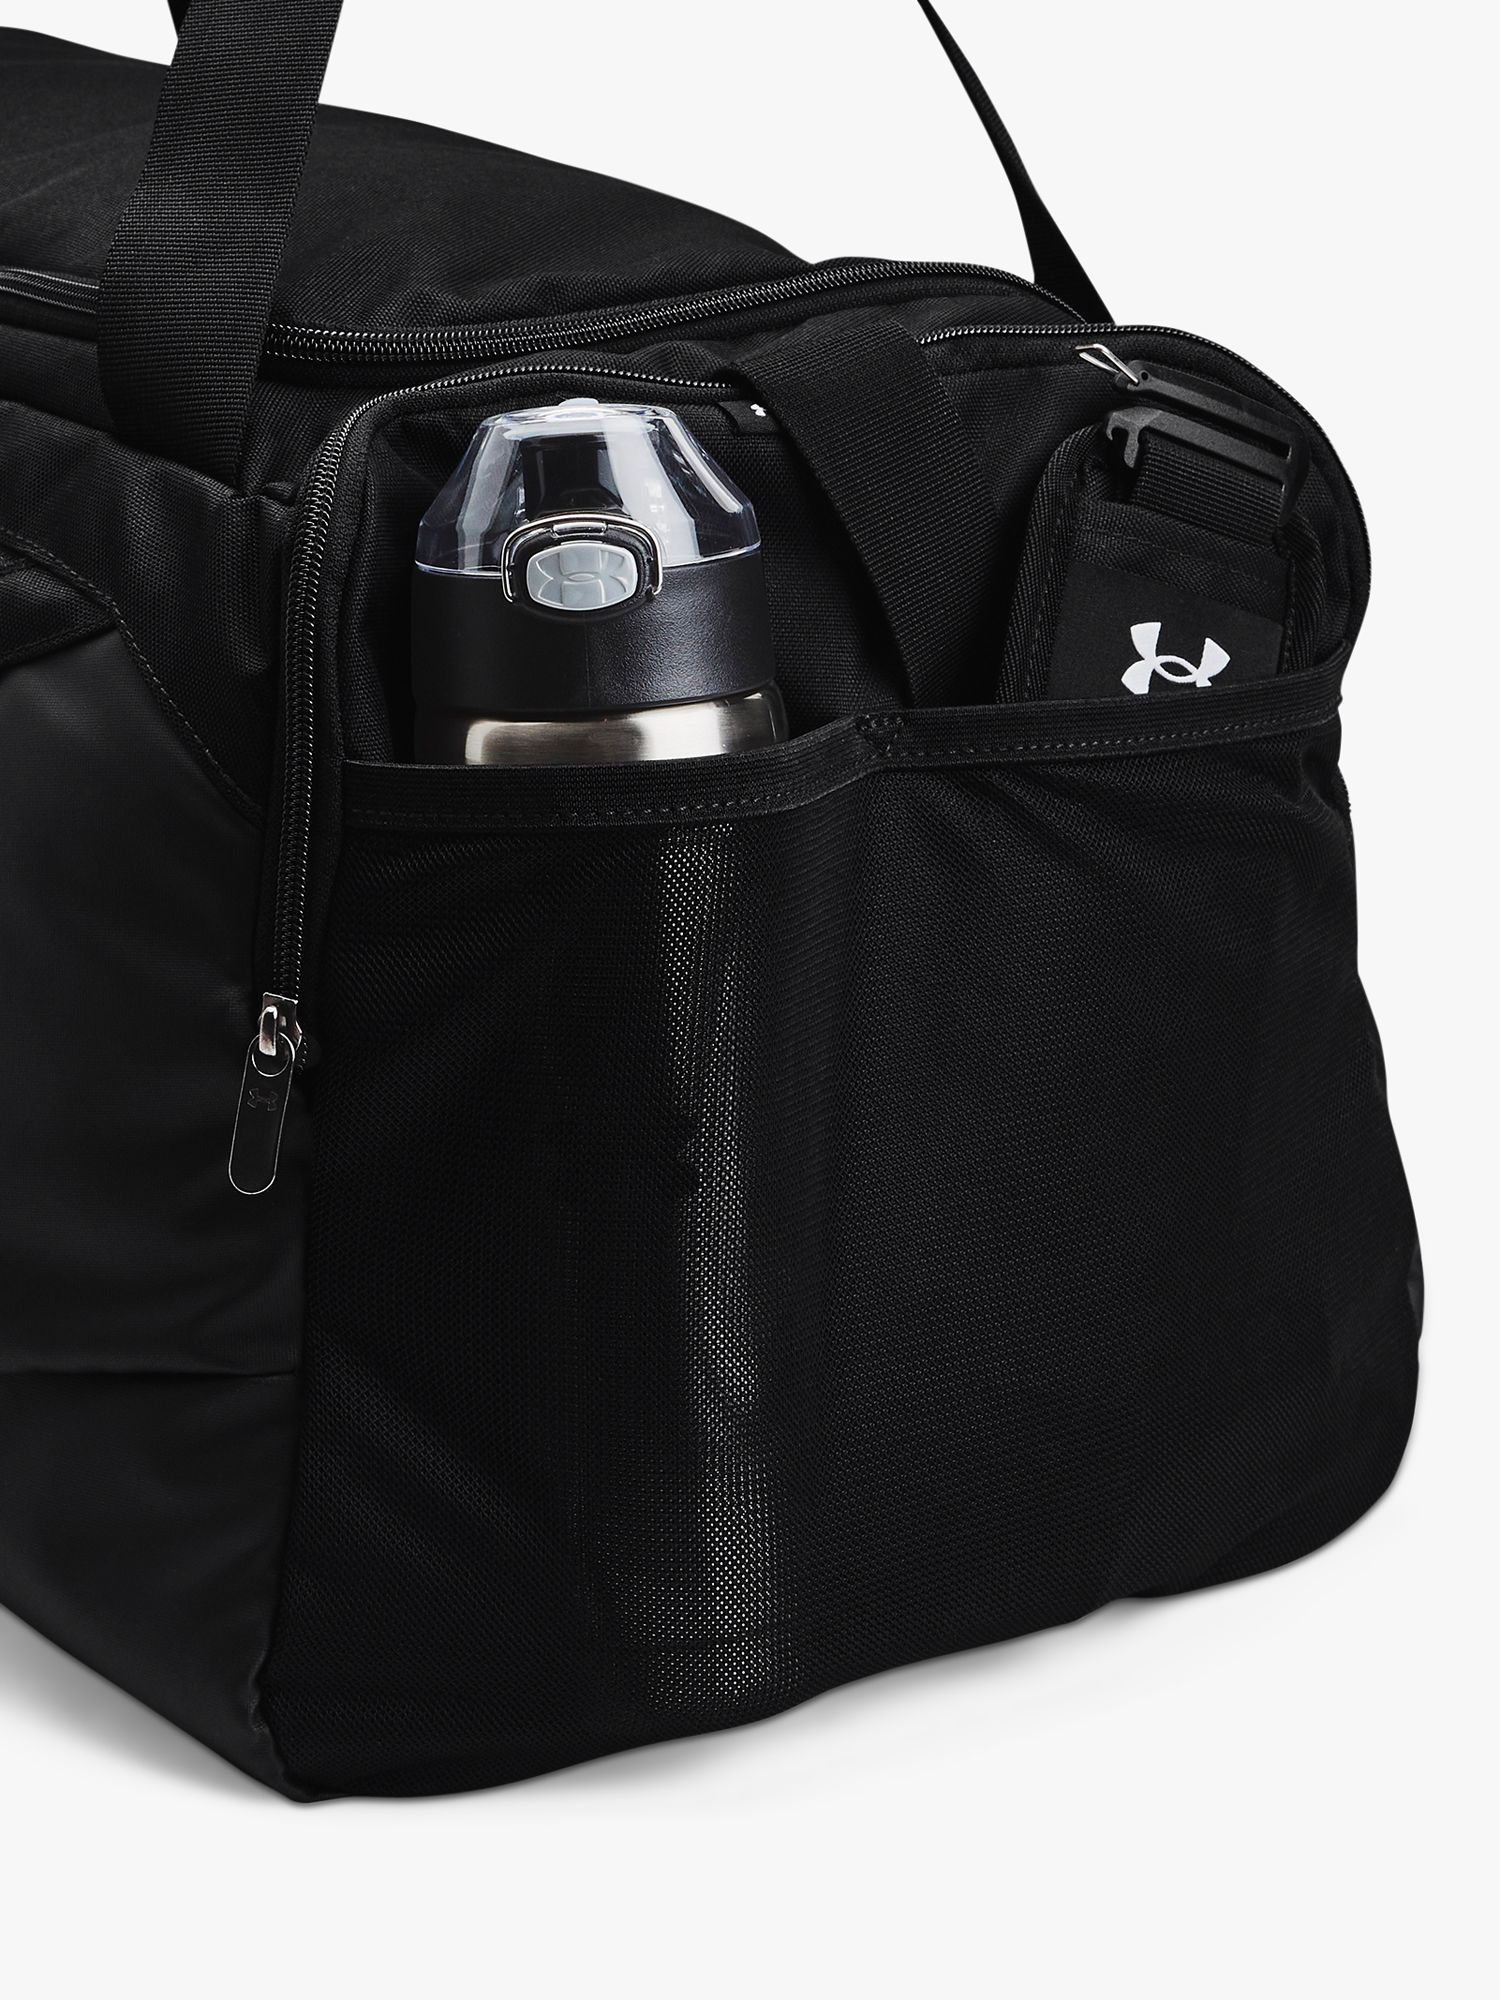 Bags :: Medium Bags :: Duffle & Boston Bags :: Under Armour Undeniable 5.0  Small Duffle Bag (Pitch Grey/Black/Black)